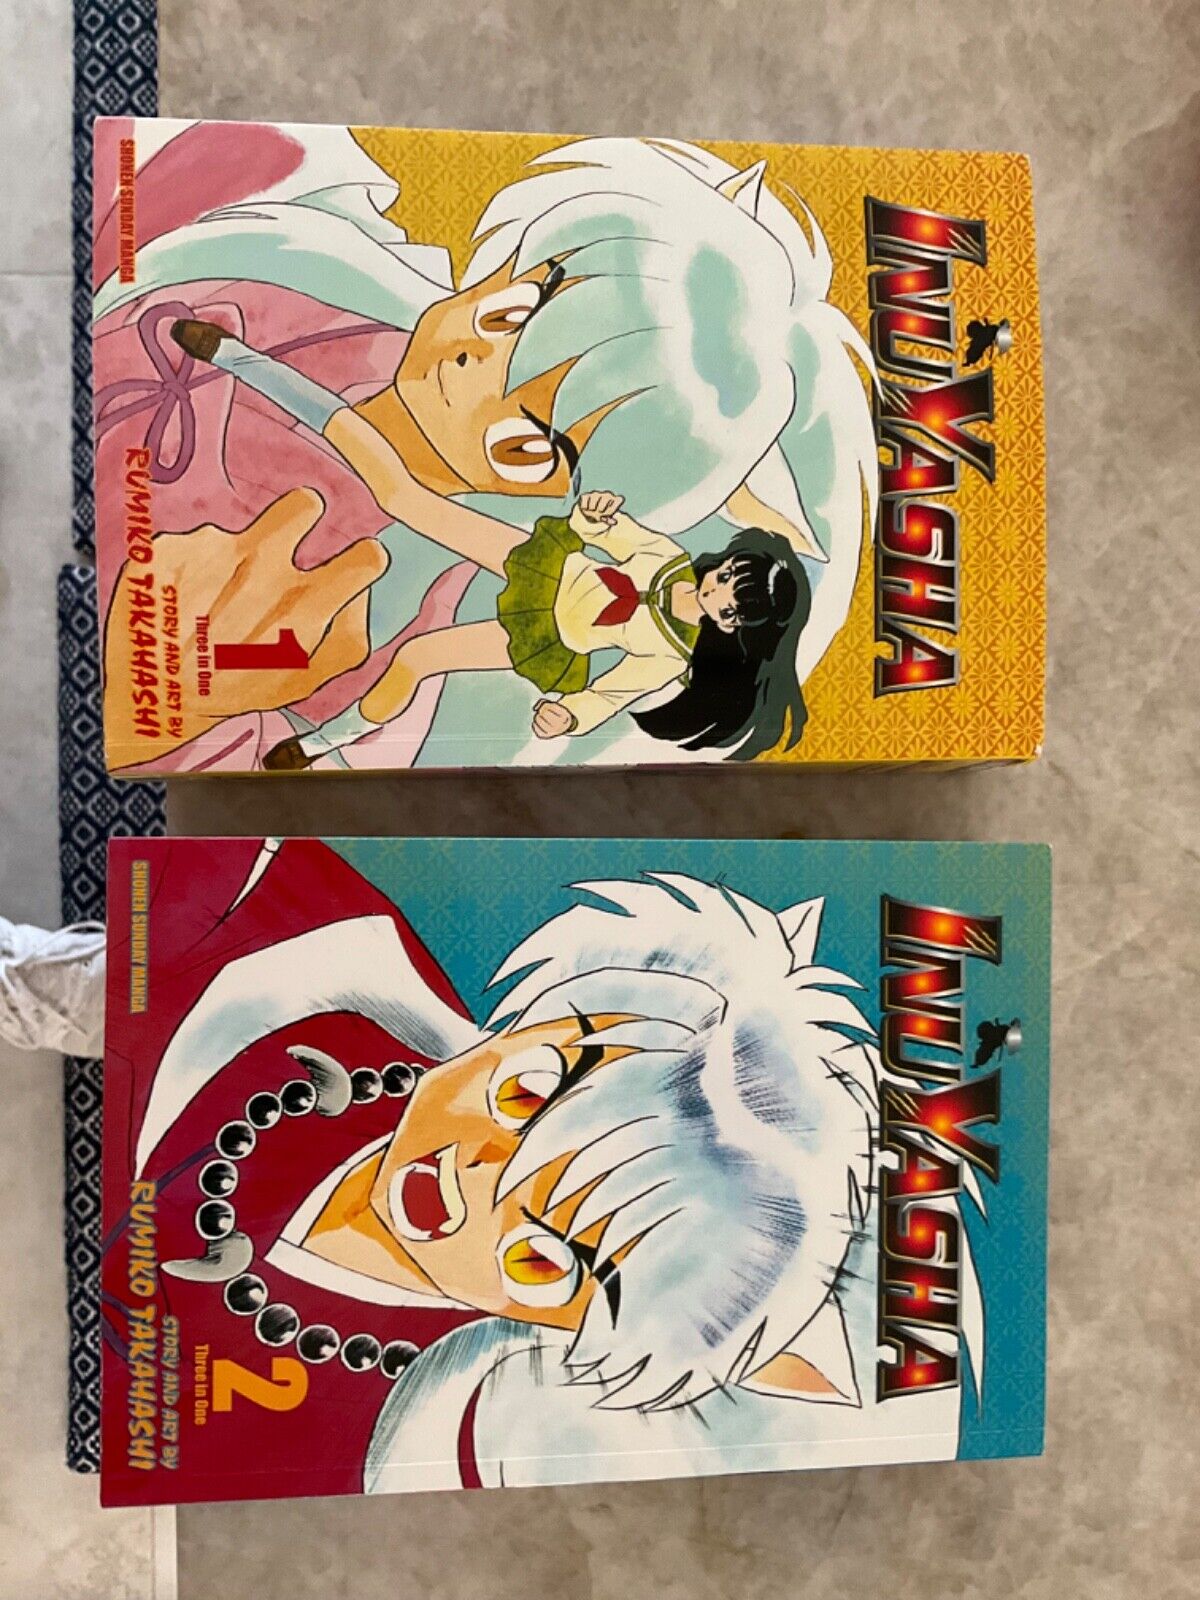 Inuyasha 3 In 1 Manga Vol  1 and 2